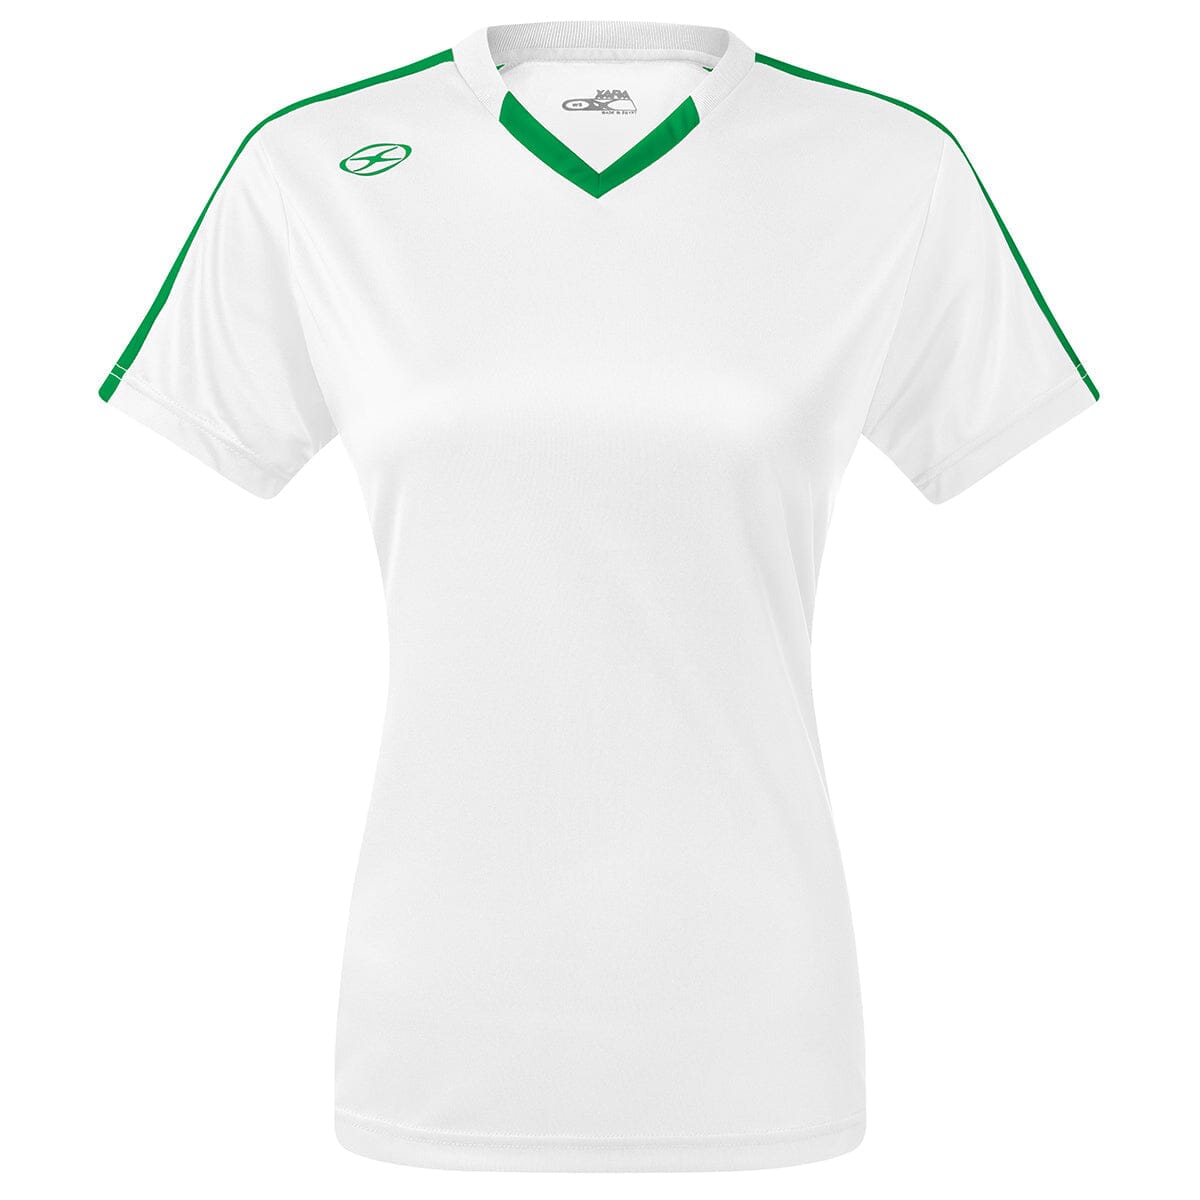 Britannia Jersey - Away Colors - Female Shirt Xara Soccer White/Green Womens Youth Medium 